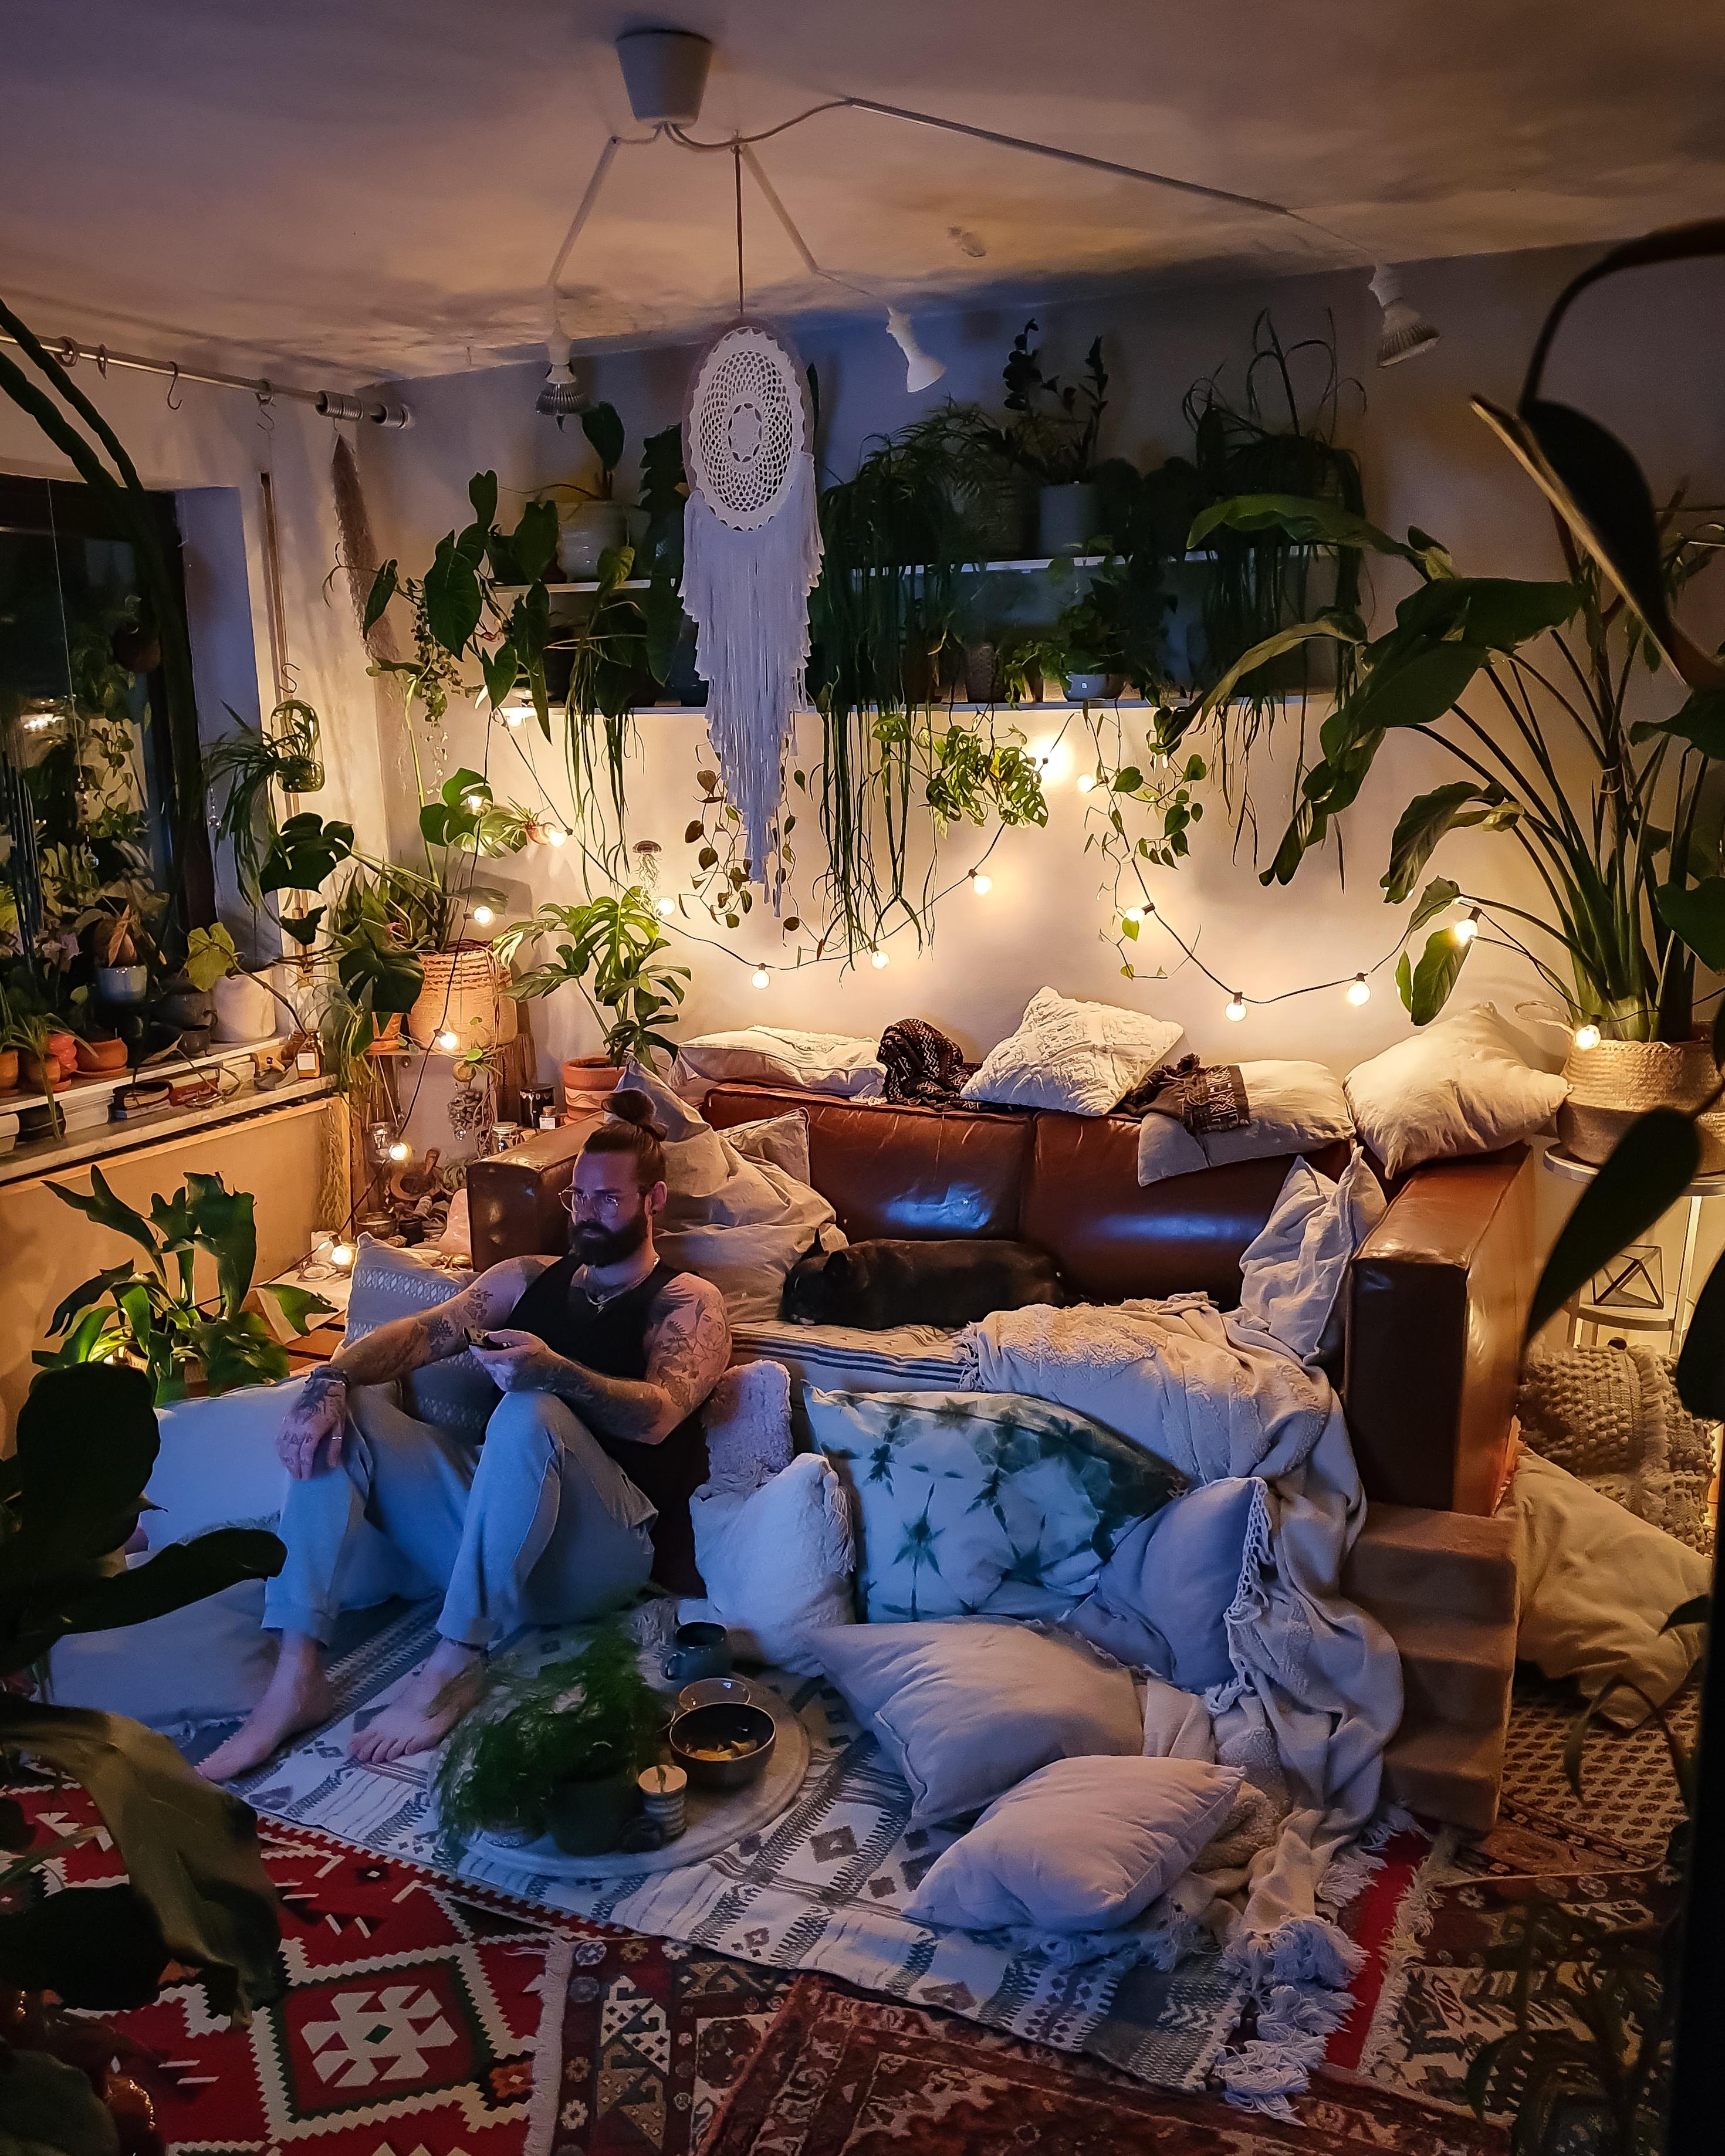 Movie night urban jungle style 🌃🪴#Wohnzimmer #urbanjungle #Pflanzen 